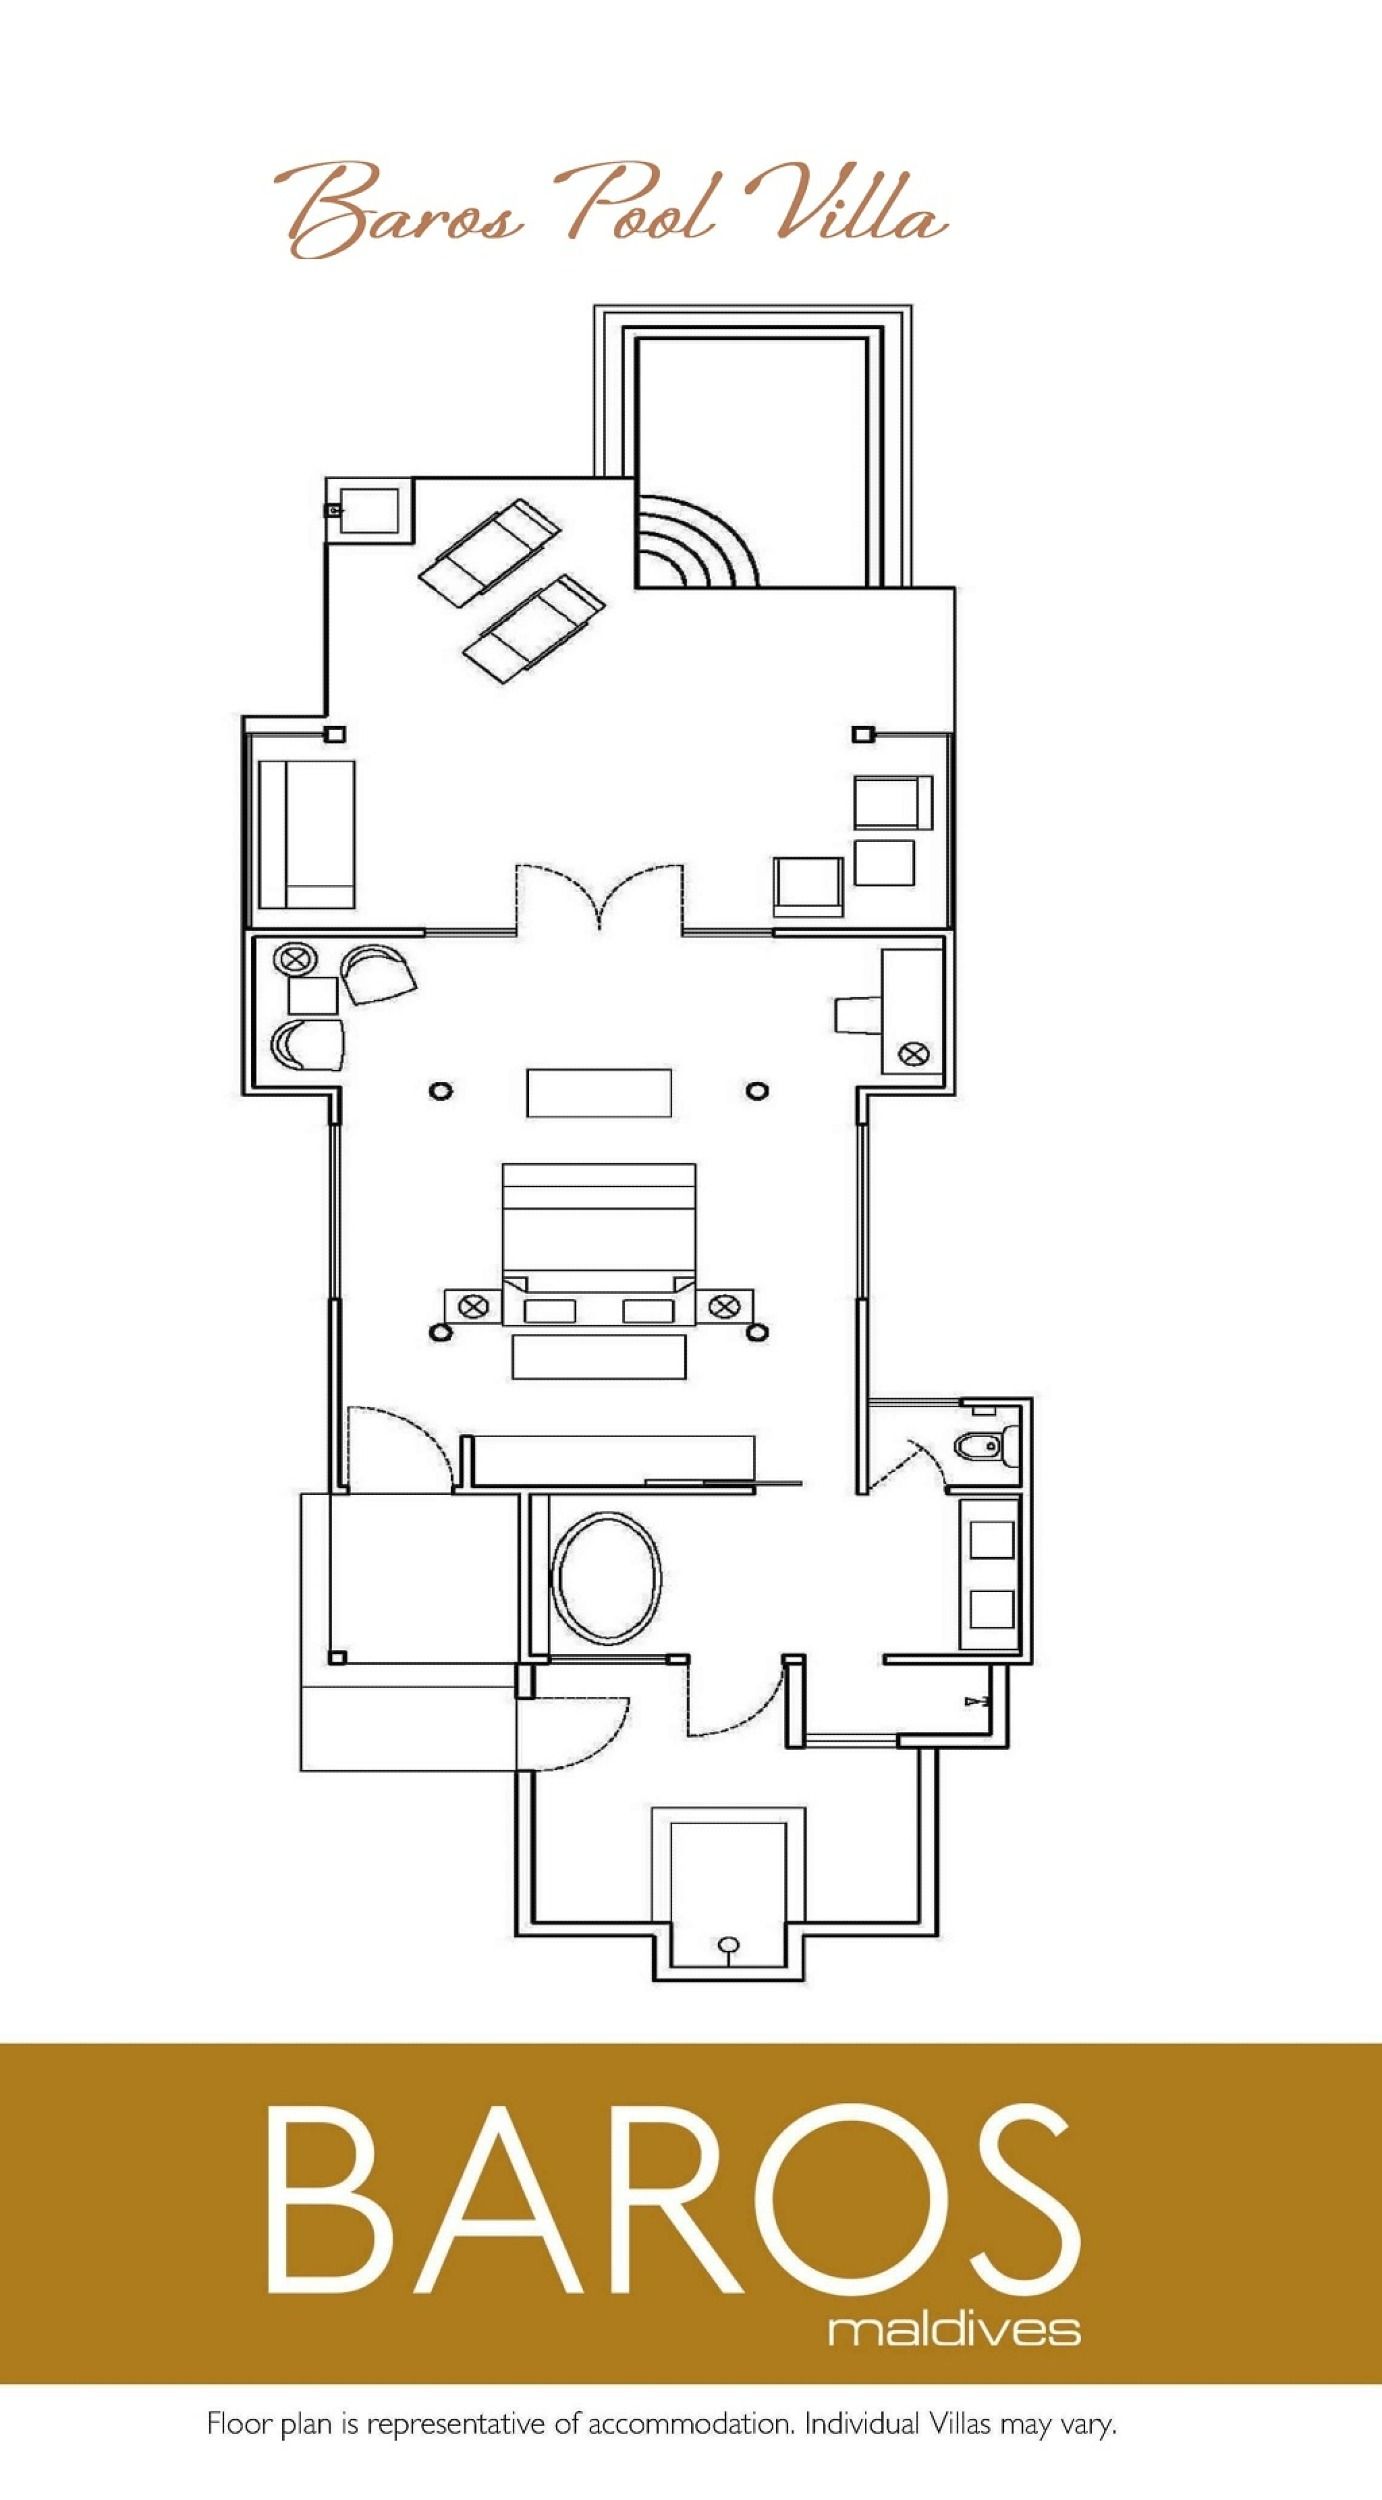 Baros Pool Villa - Floor plan